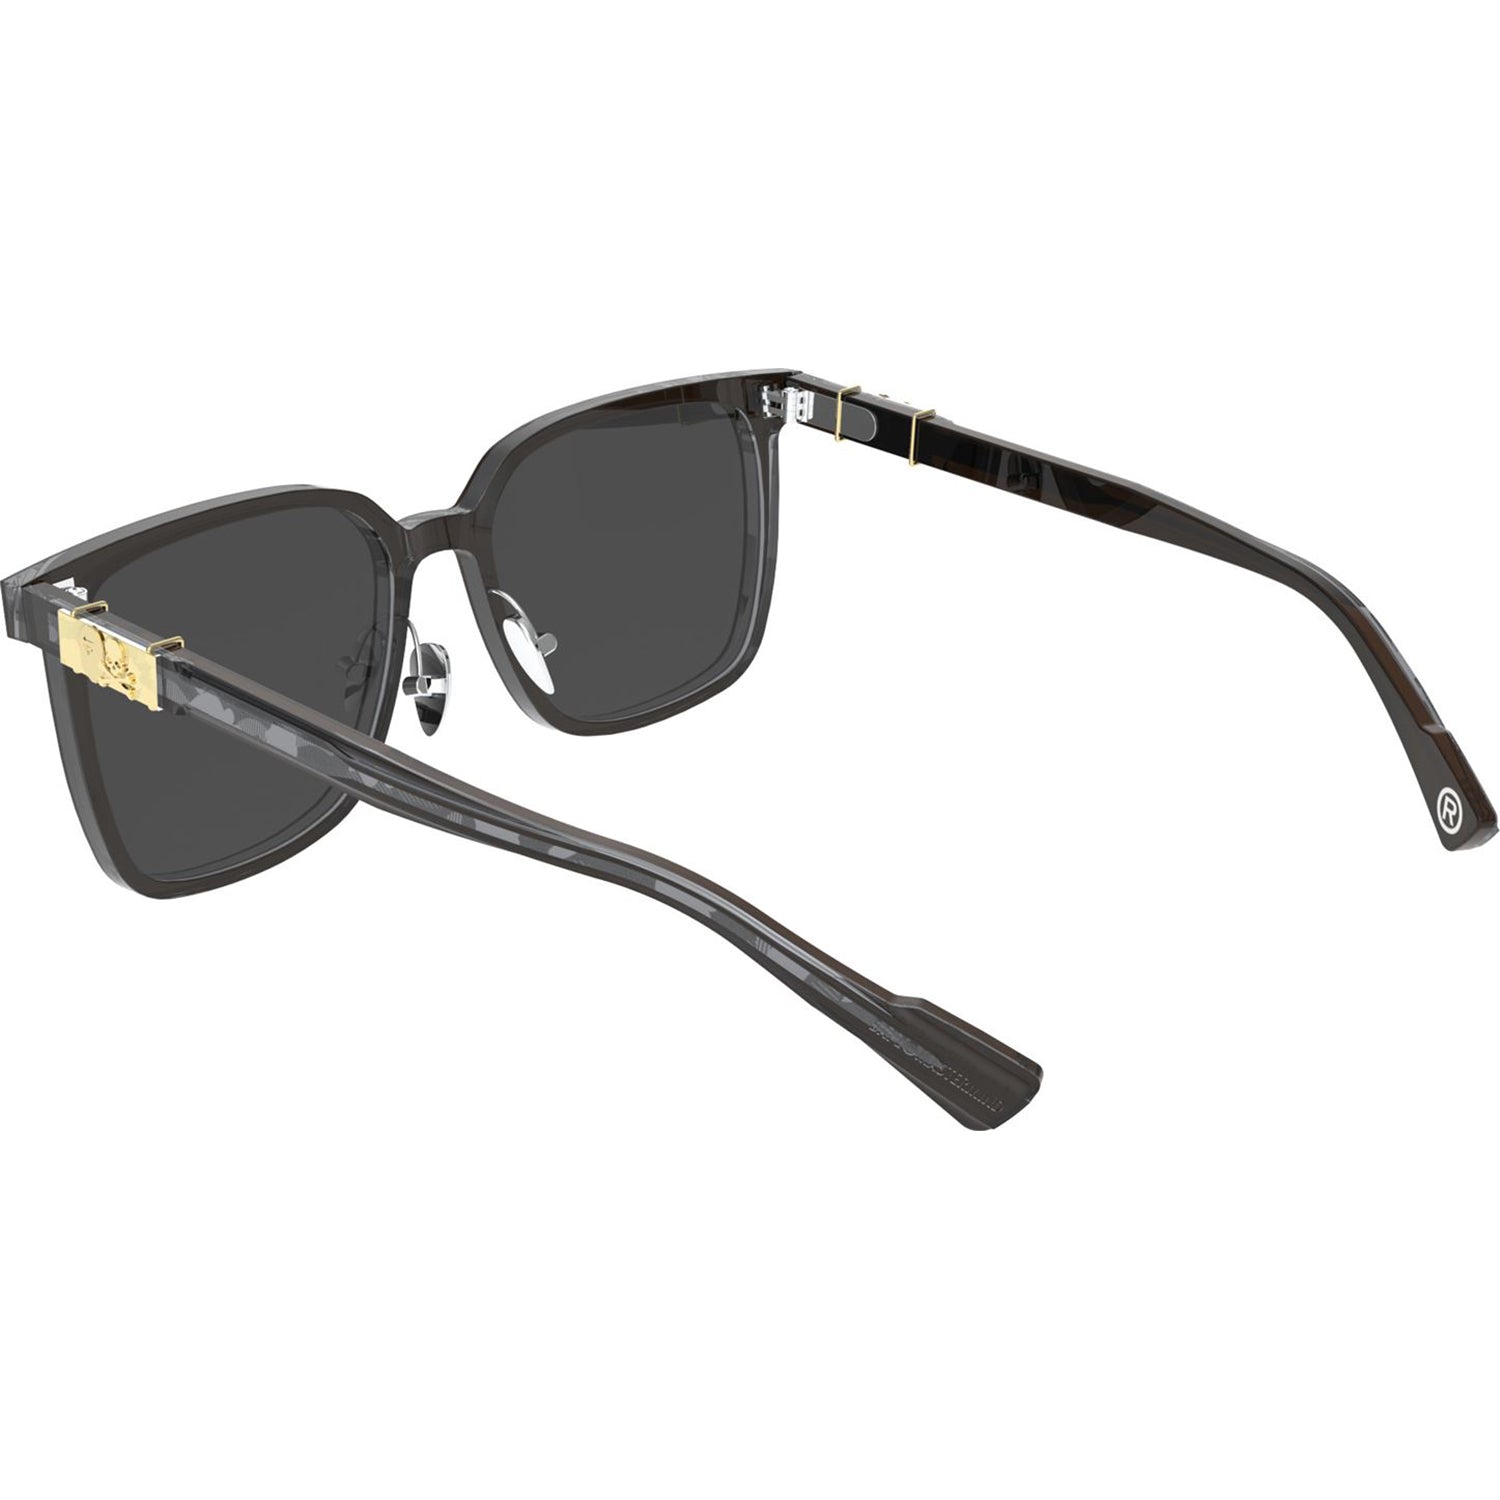 BAPE x Mastermind Japan BMJ004 BC Sunglasses Sunglasses Black/Green Camo